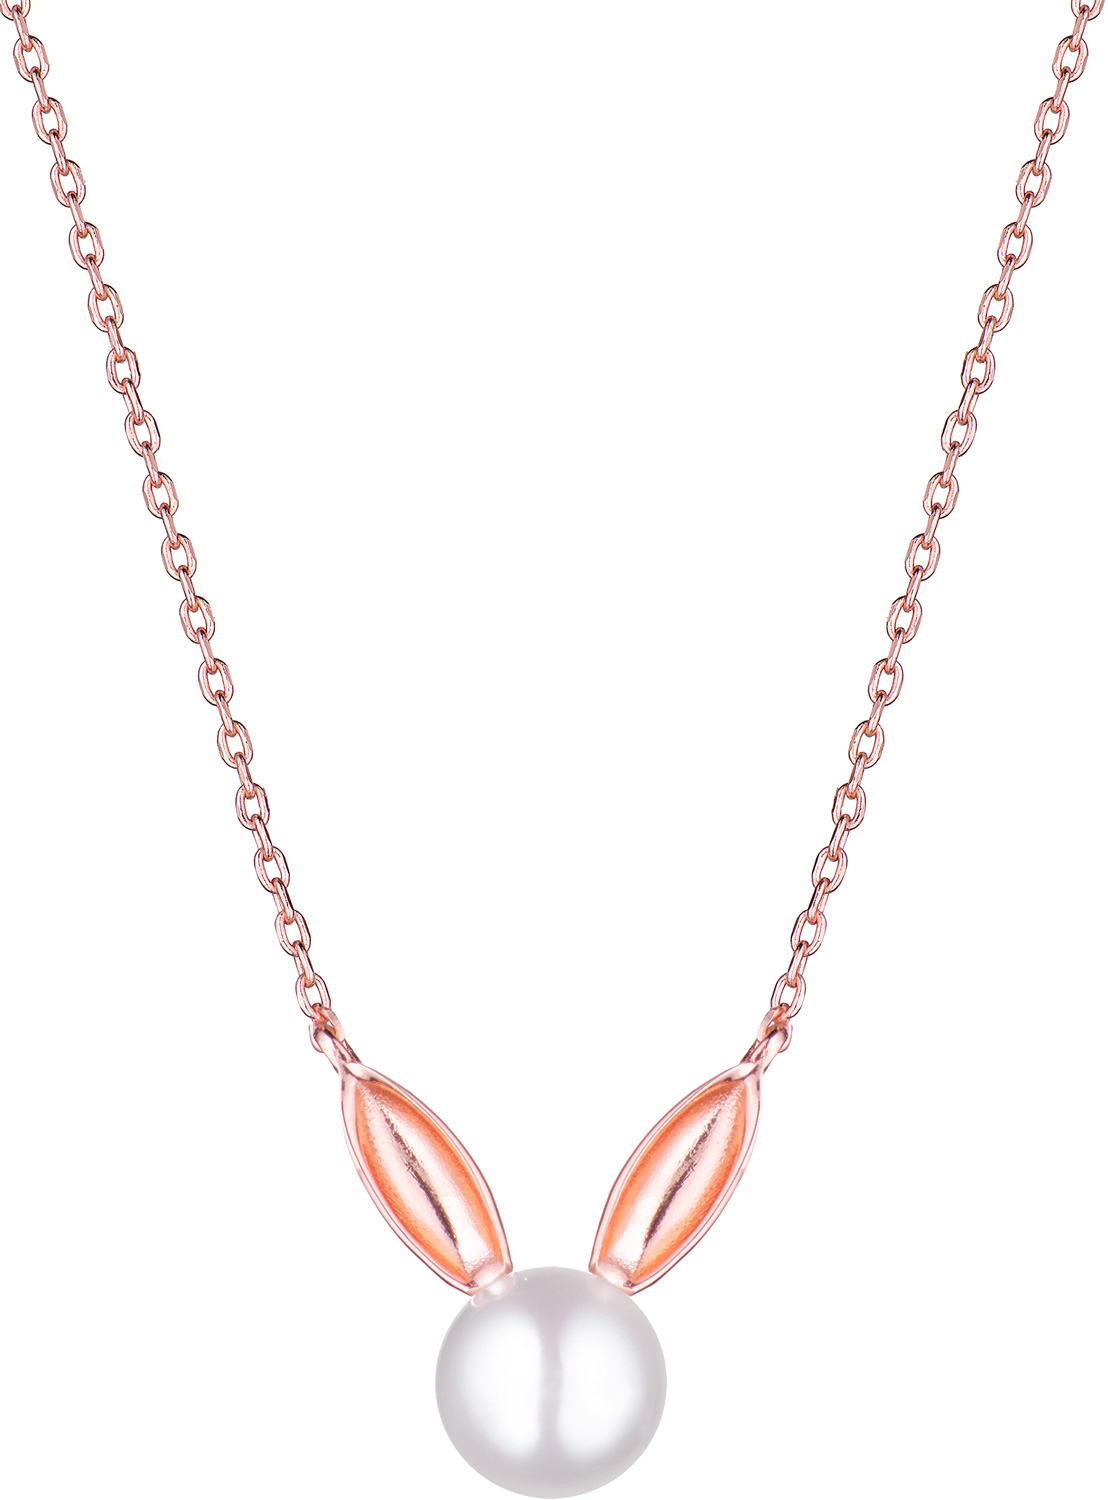     '''' Yana  Jewellery 222/04R-pearl-rabbit   